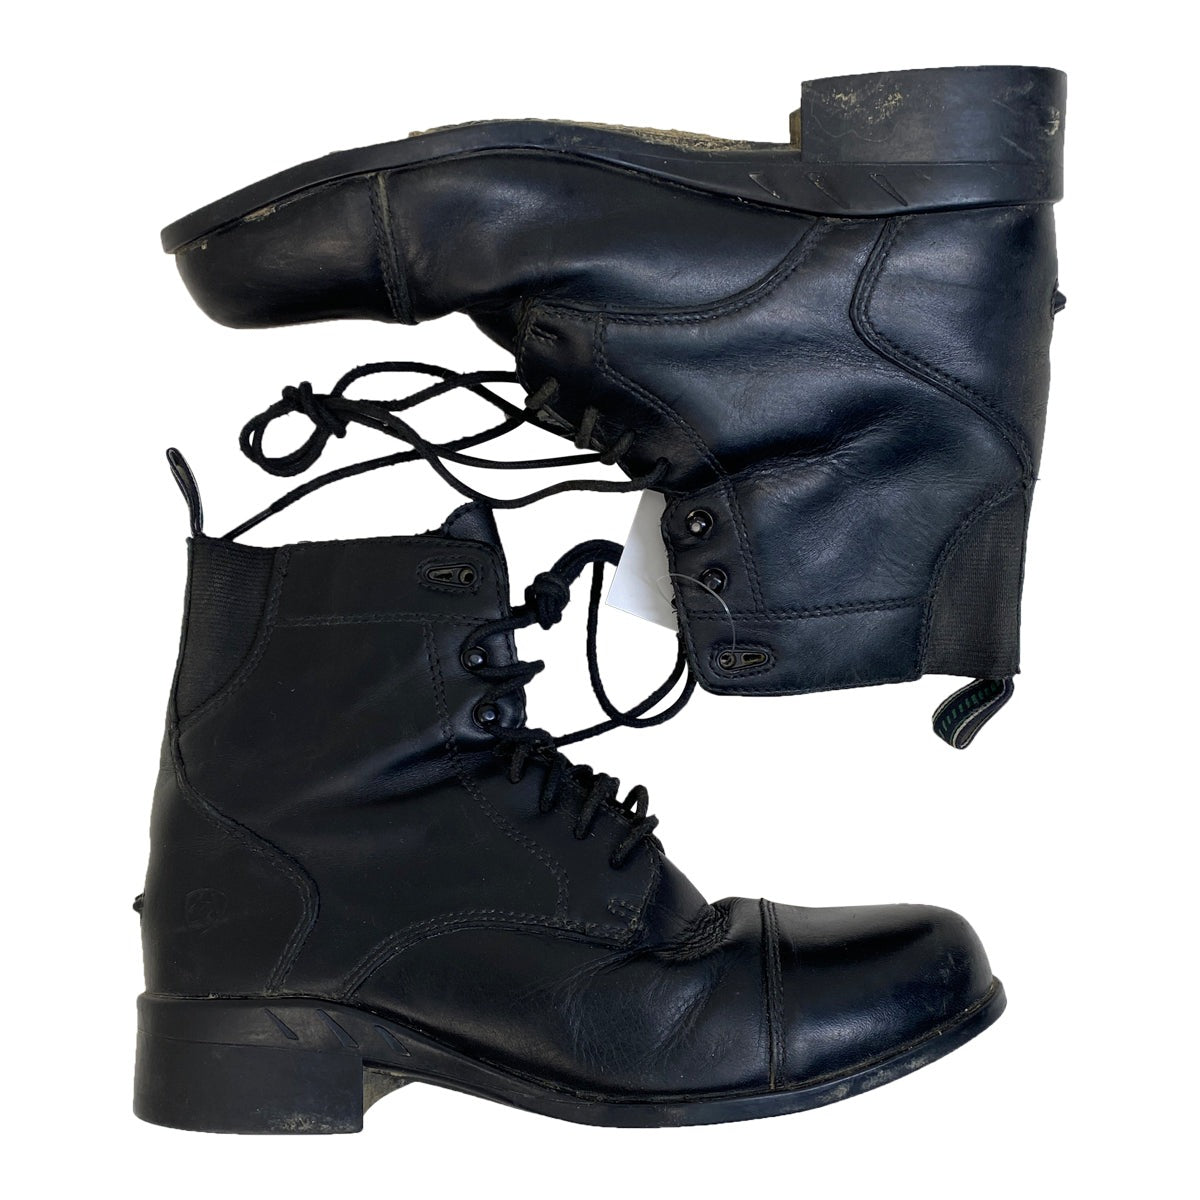 Ariat 'Performer IV' Paddock Boot in Black